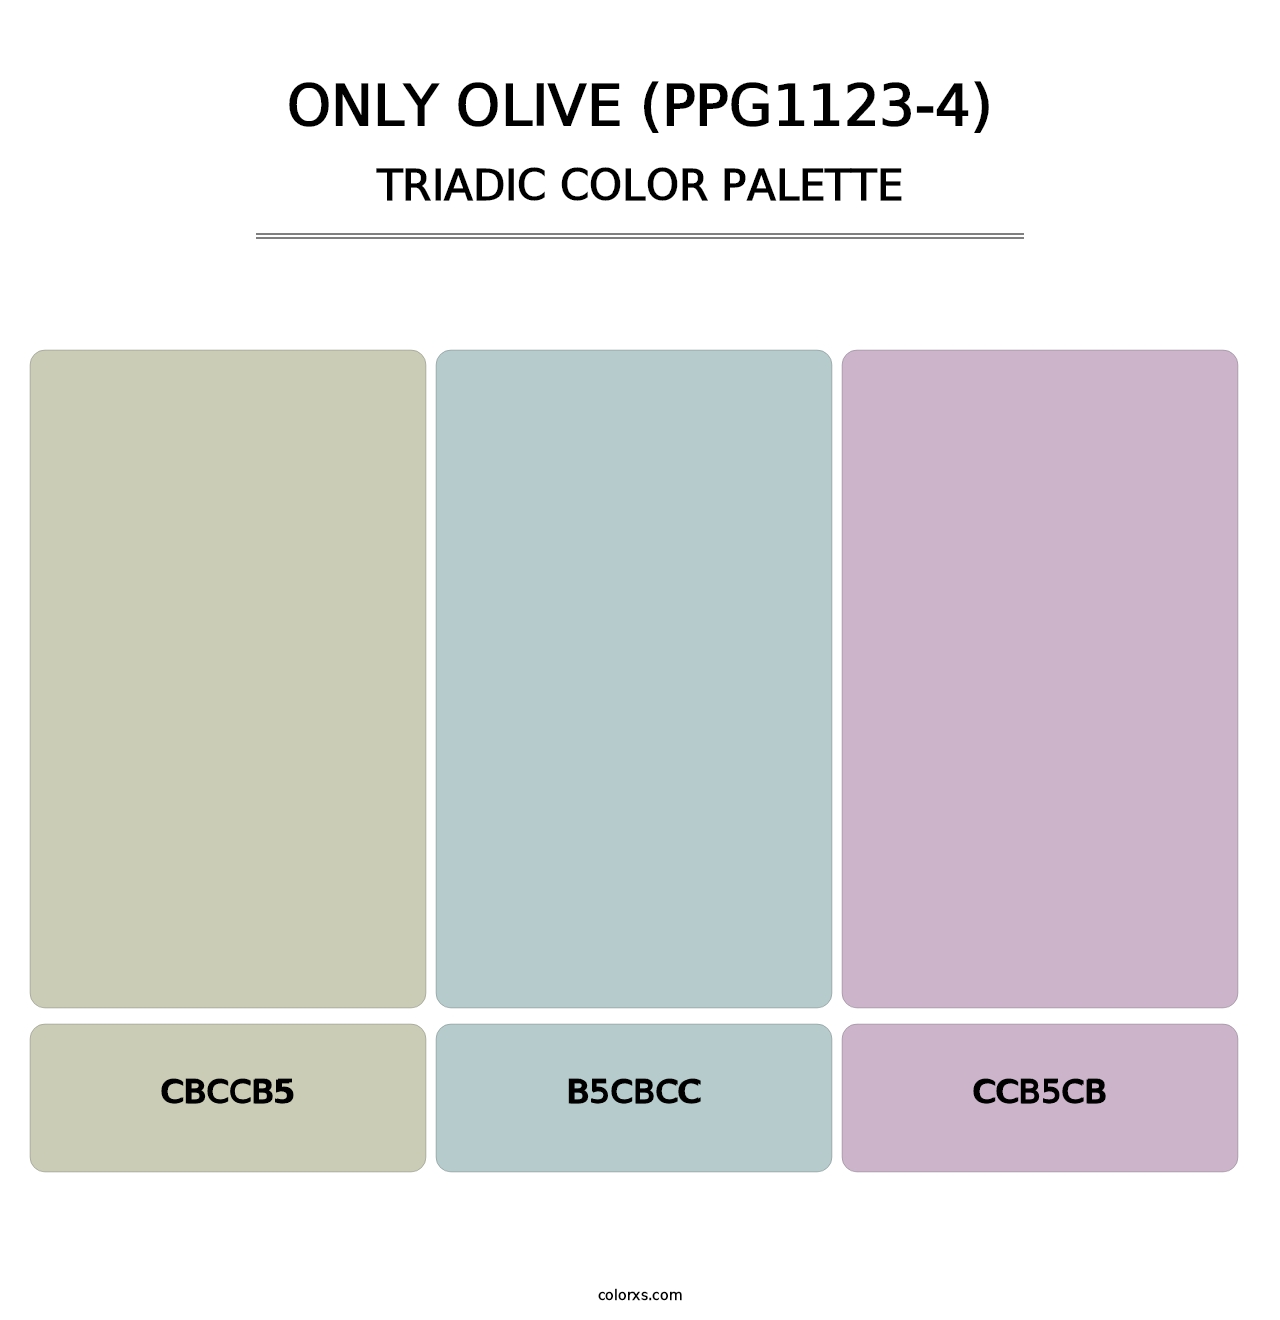 Only Olive (PPG1123-4) - Triadic Color Palette